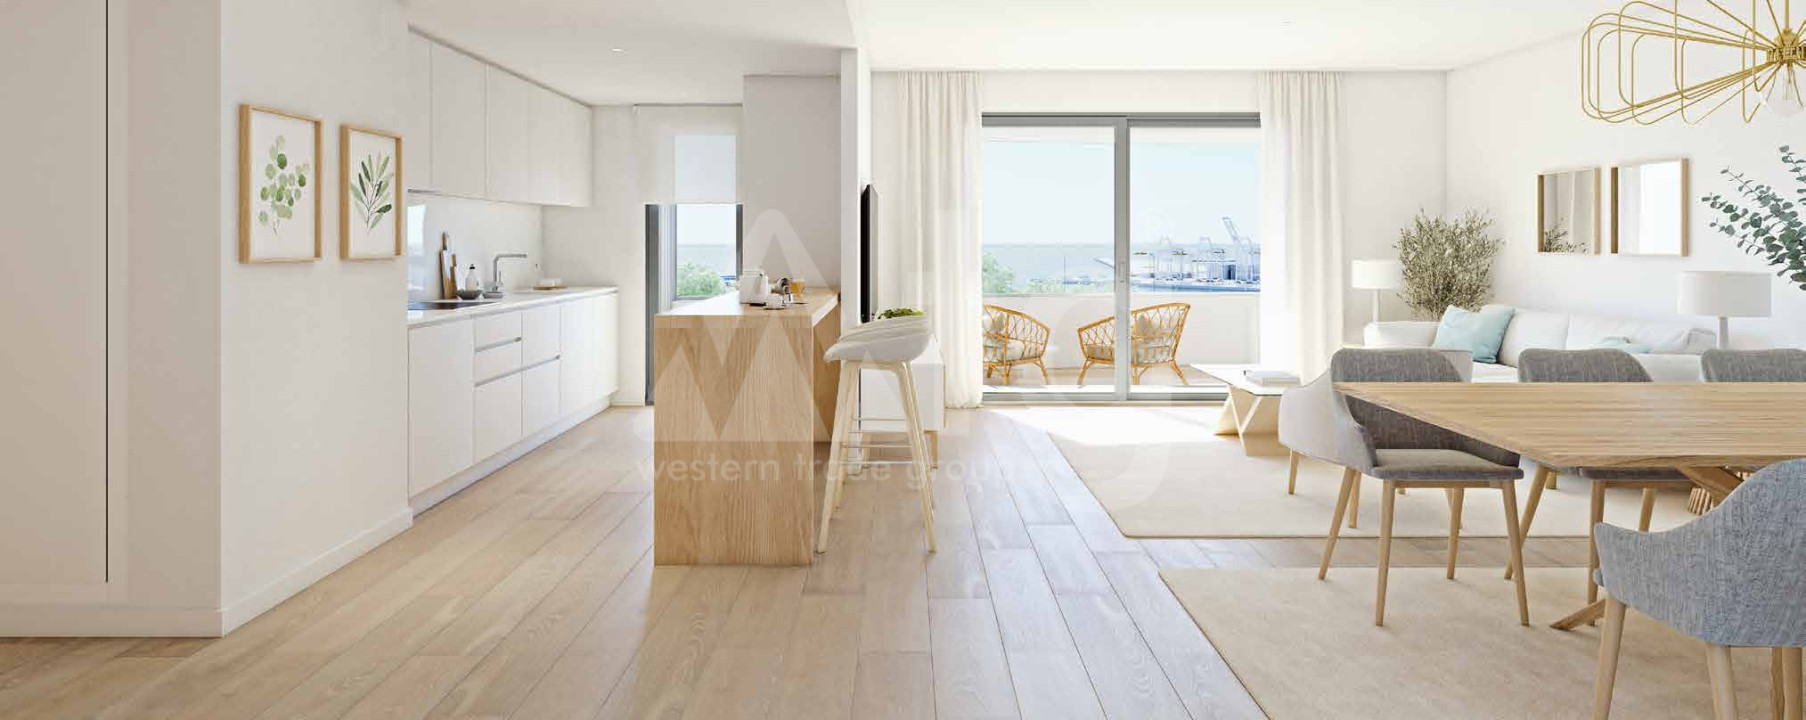 3 bedroom Apartment in Alicante - AEH25884 - 3